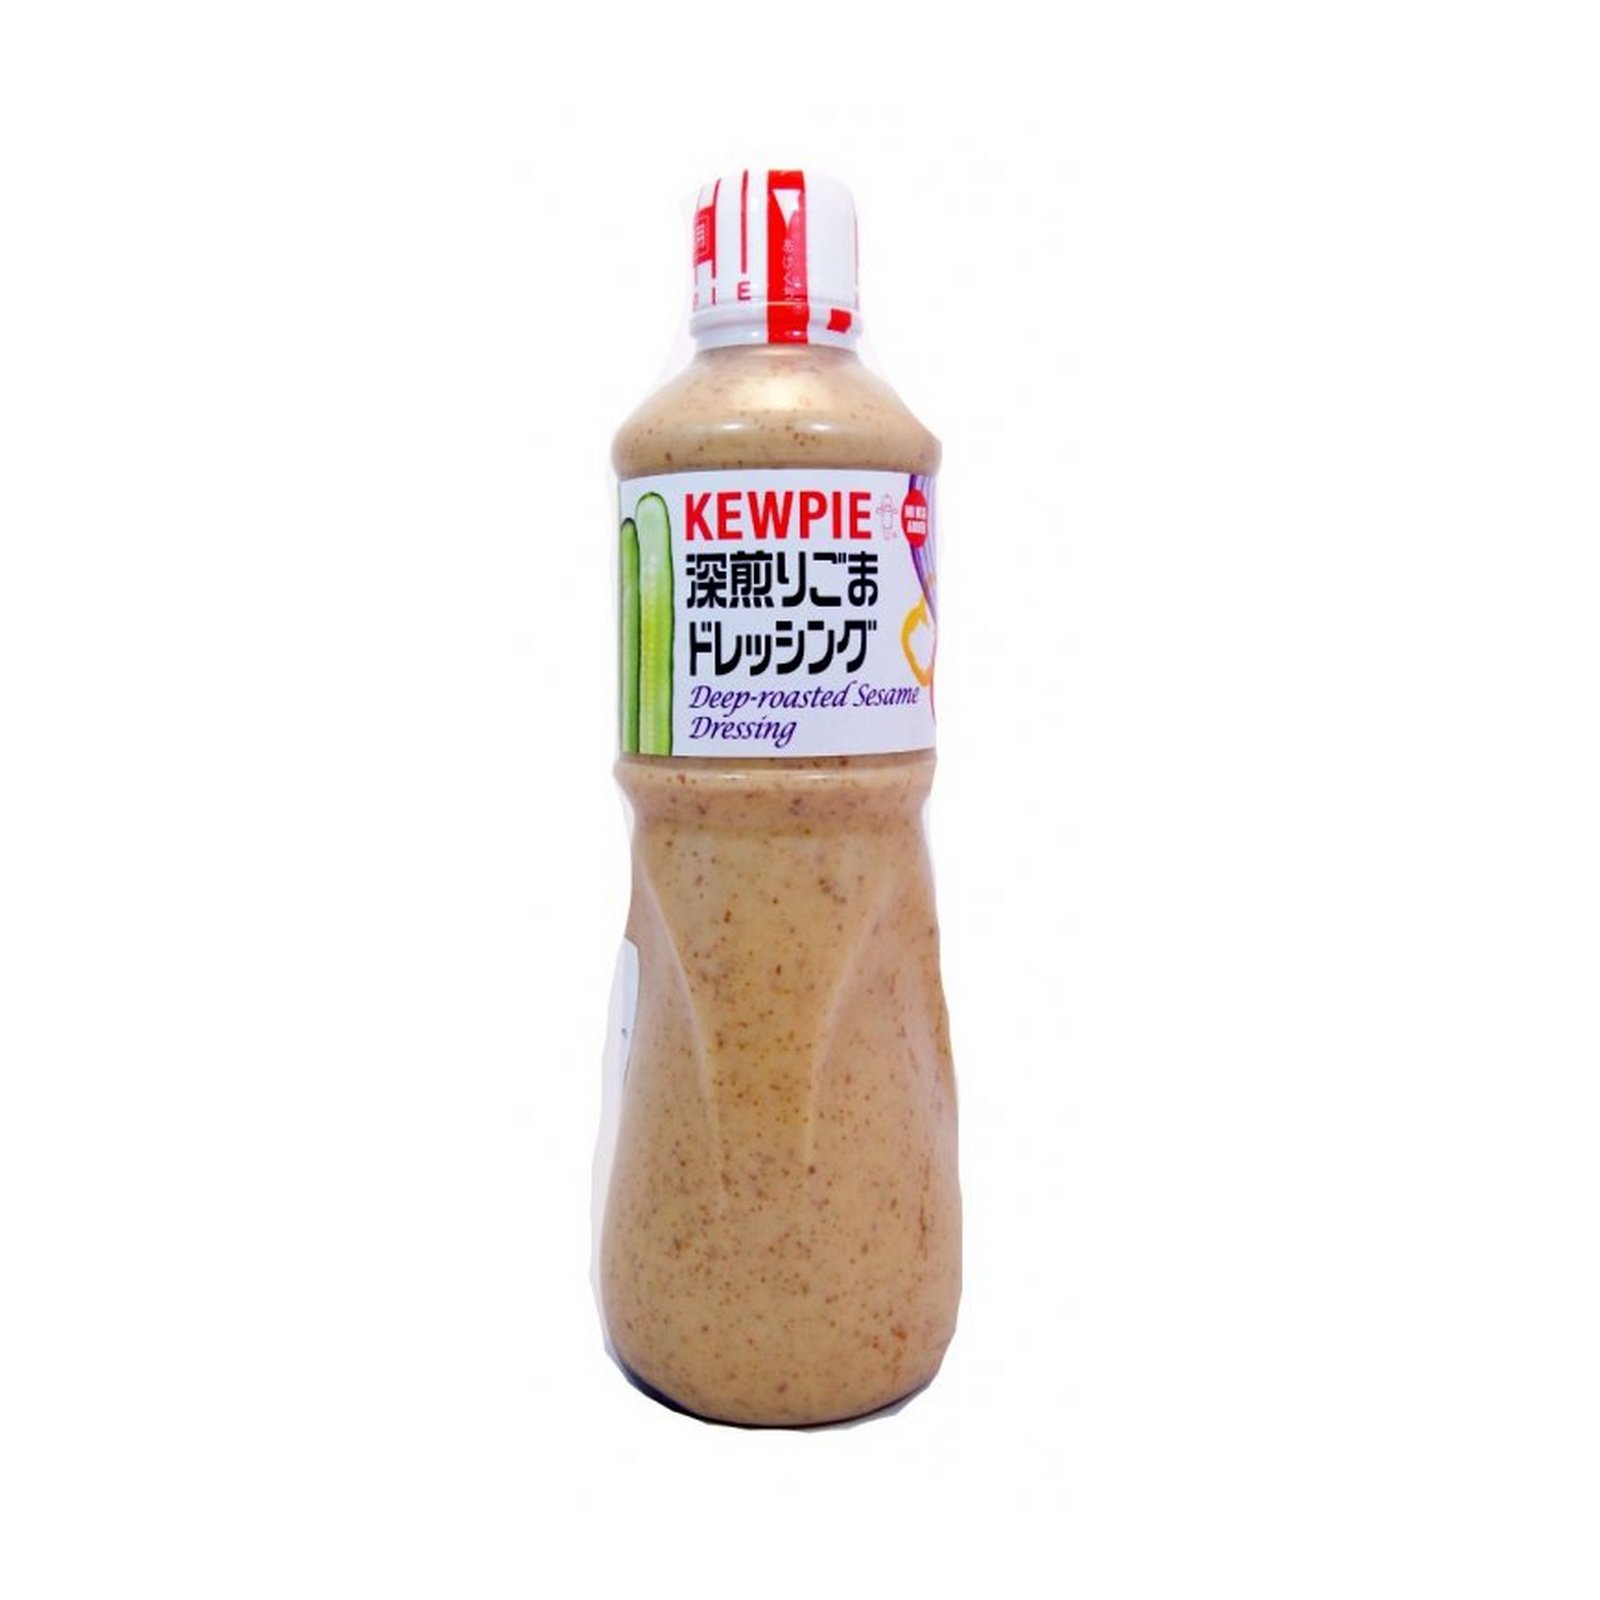 Kewpie sesame dressing 1L